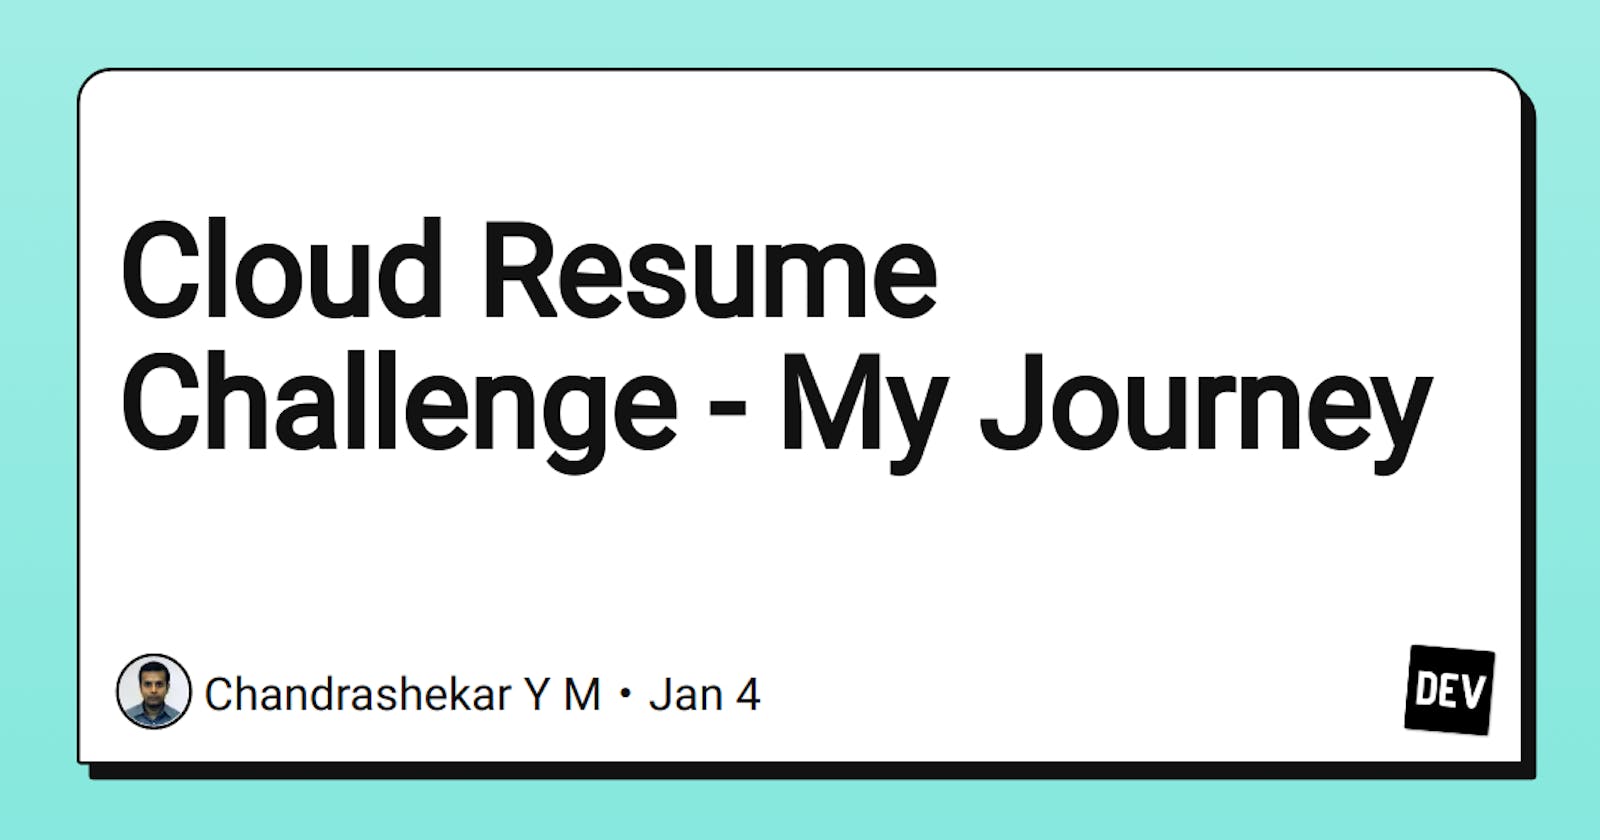 Cloud Resume Challenge - My Journey